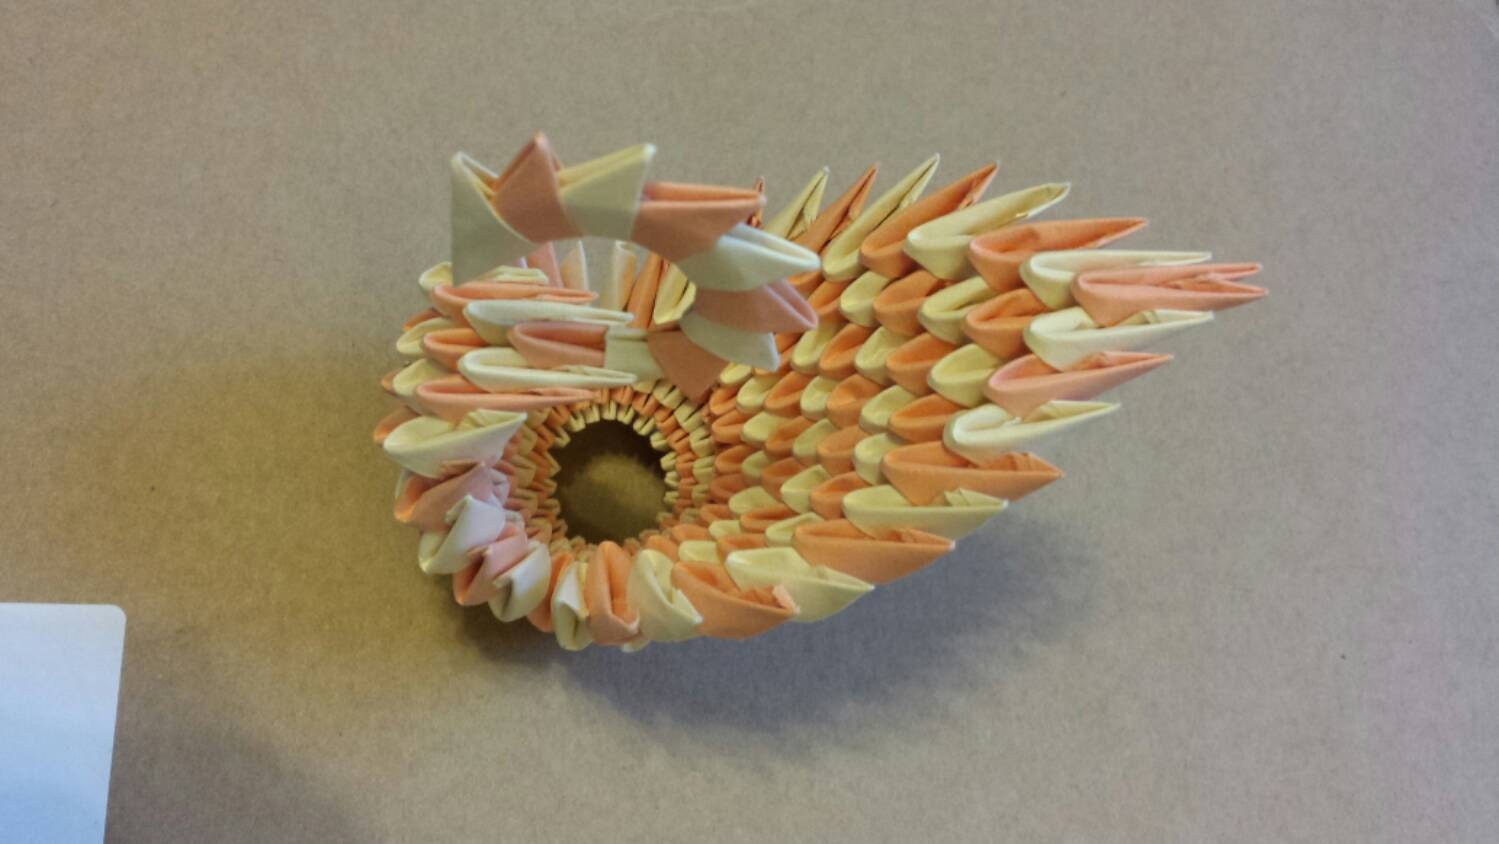 Handmade golden venture origami swanpeach and by FoxtailTaxidermy